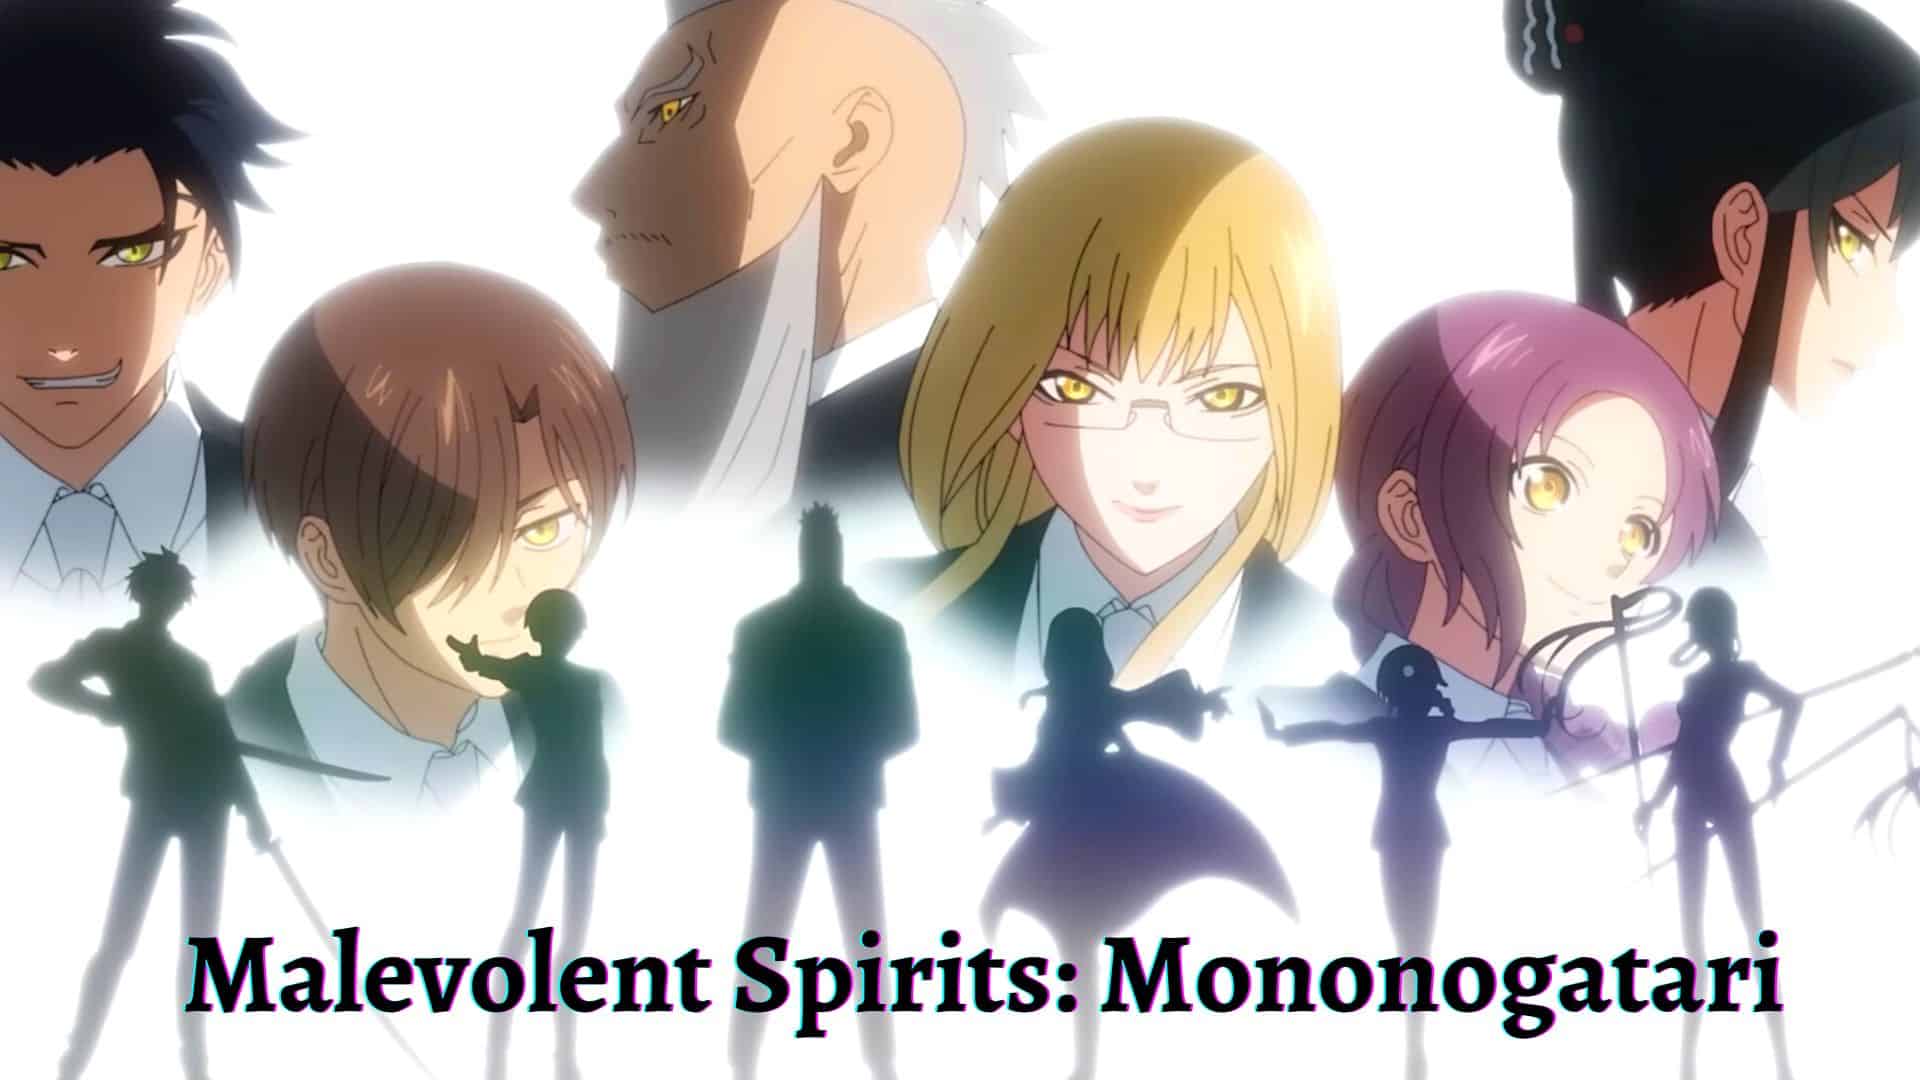 Mononogatari Episode 1 Release Date